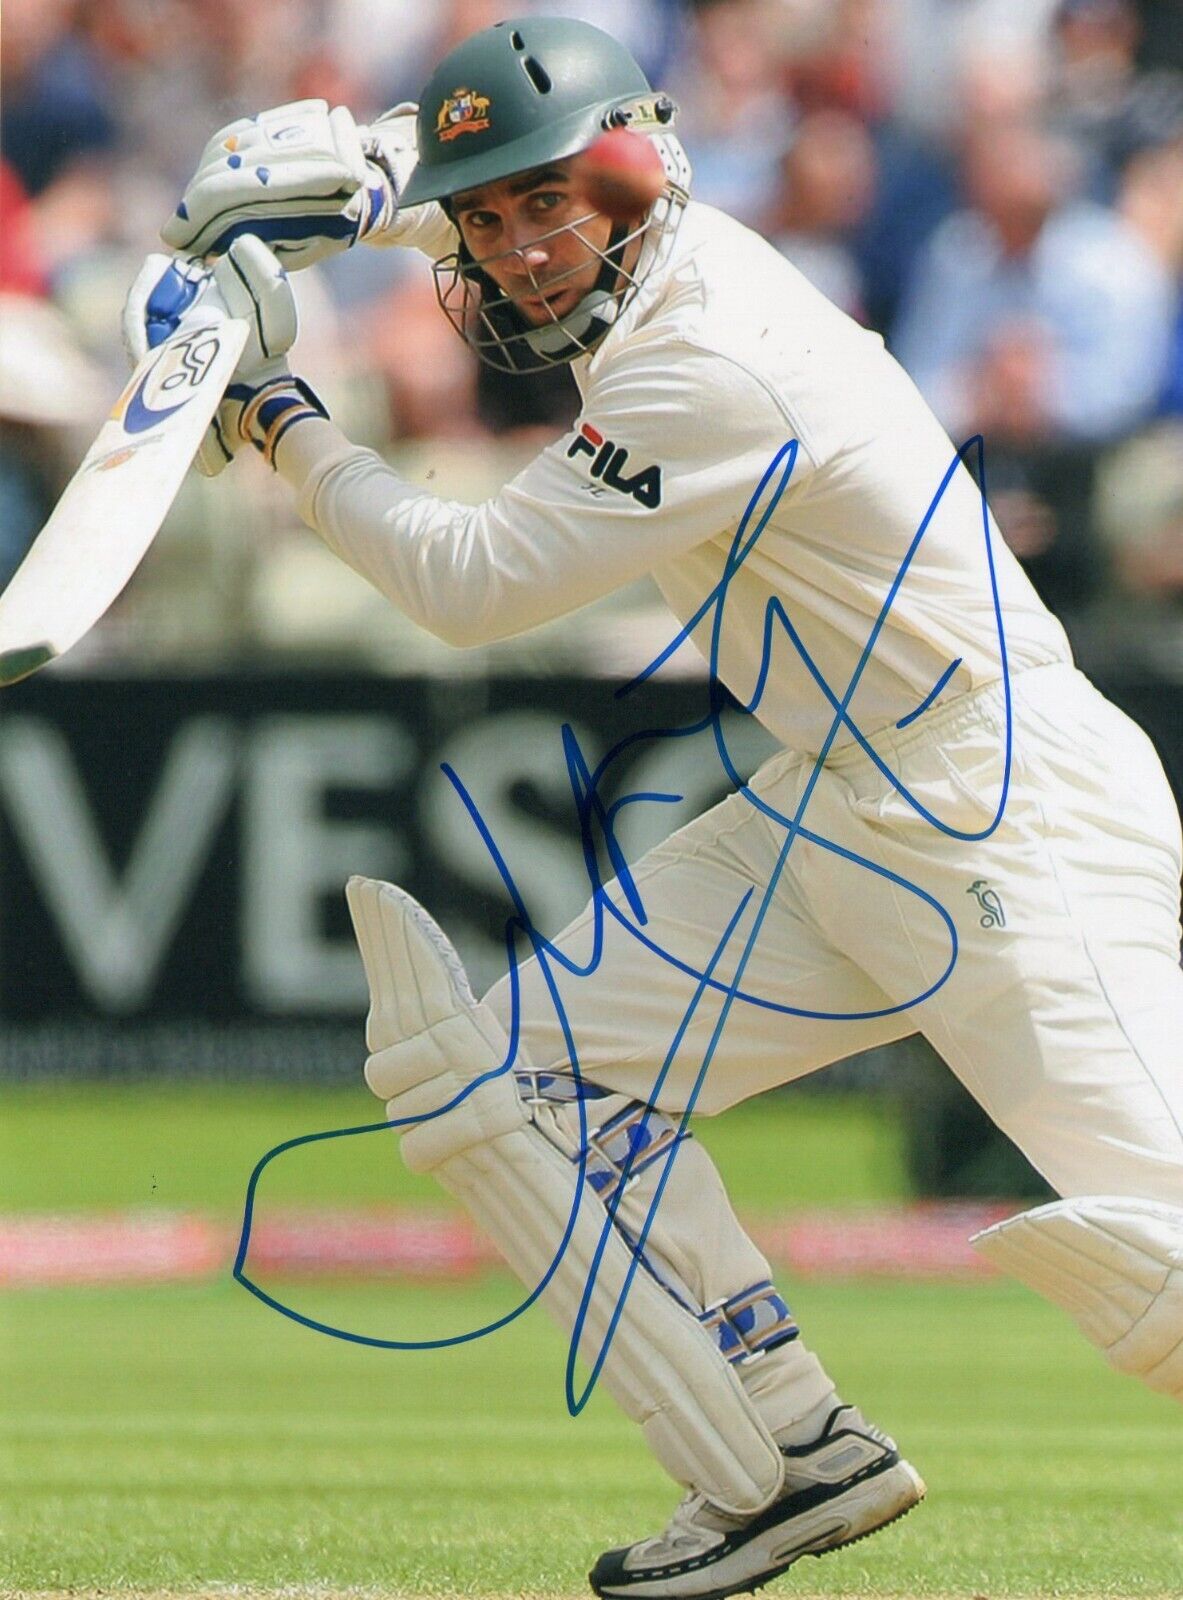 Original Autographed Photo of Former Australian Cricketer Justin Langer